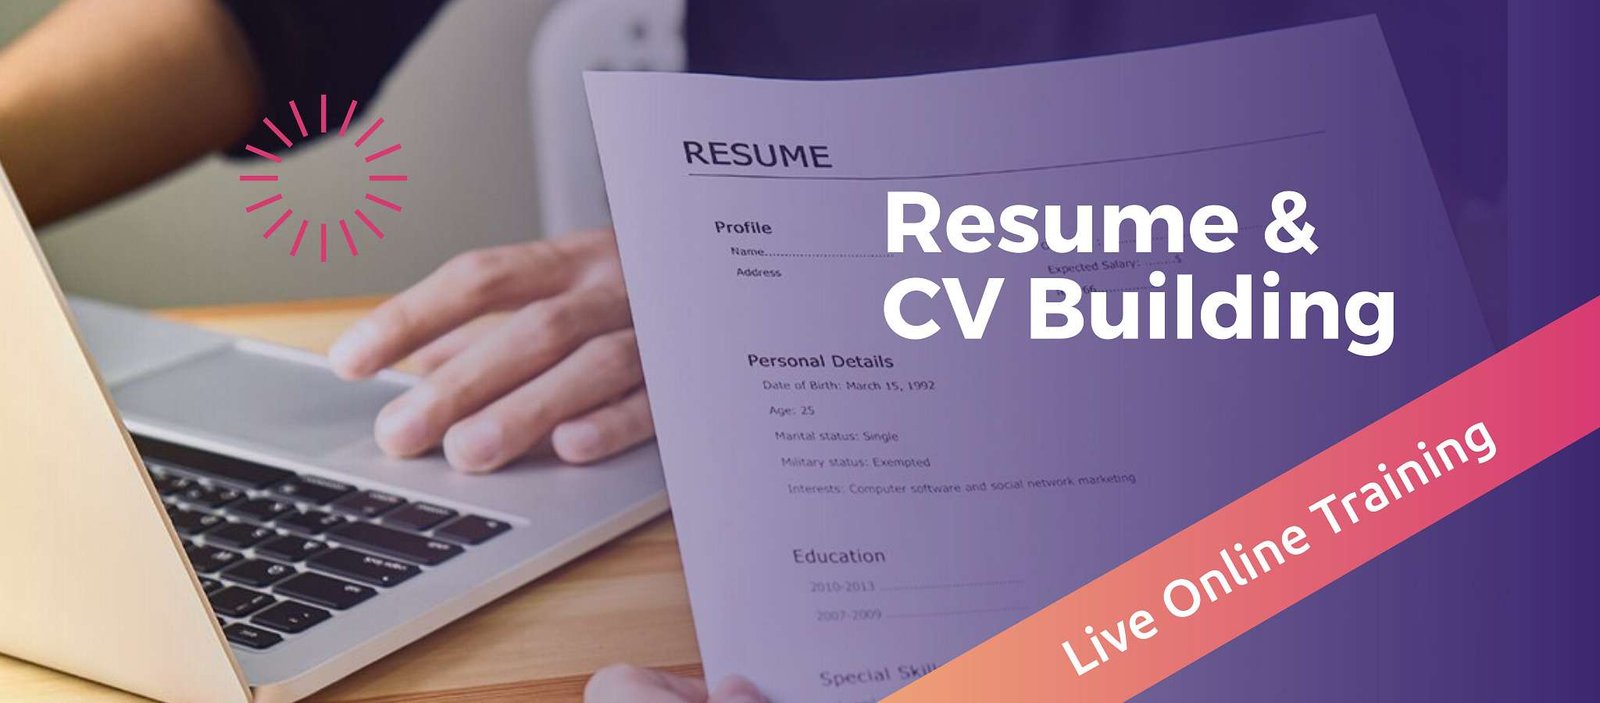 Resume & CV Building